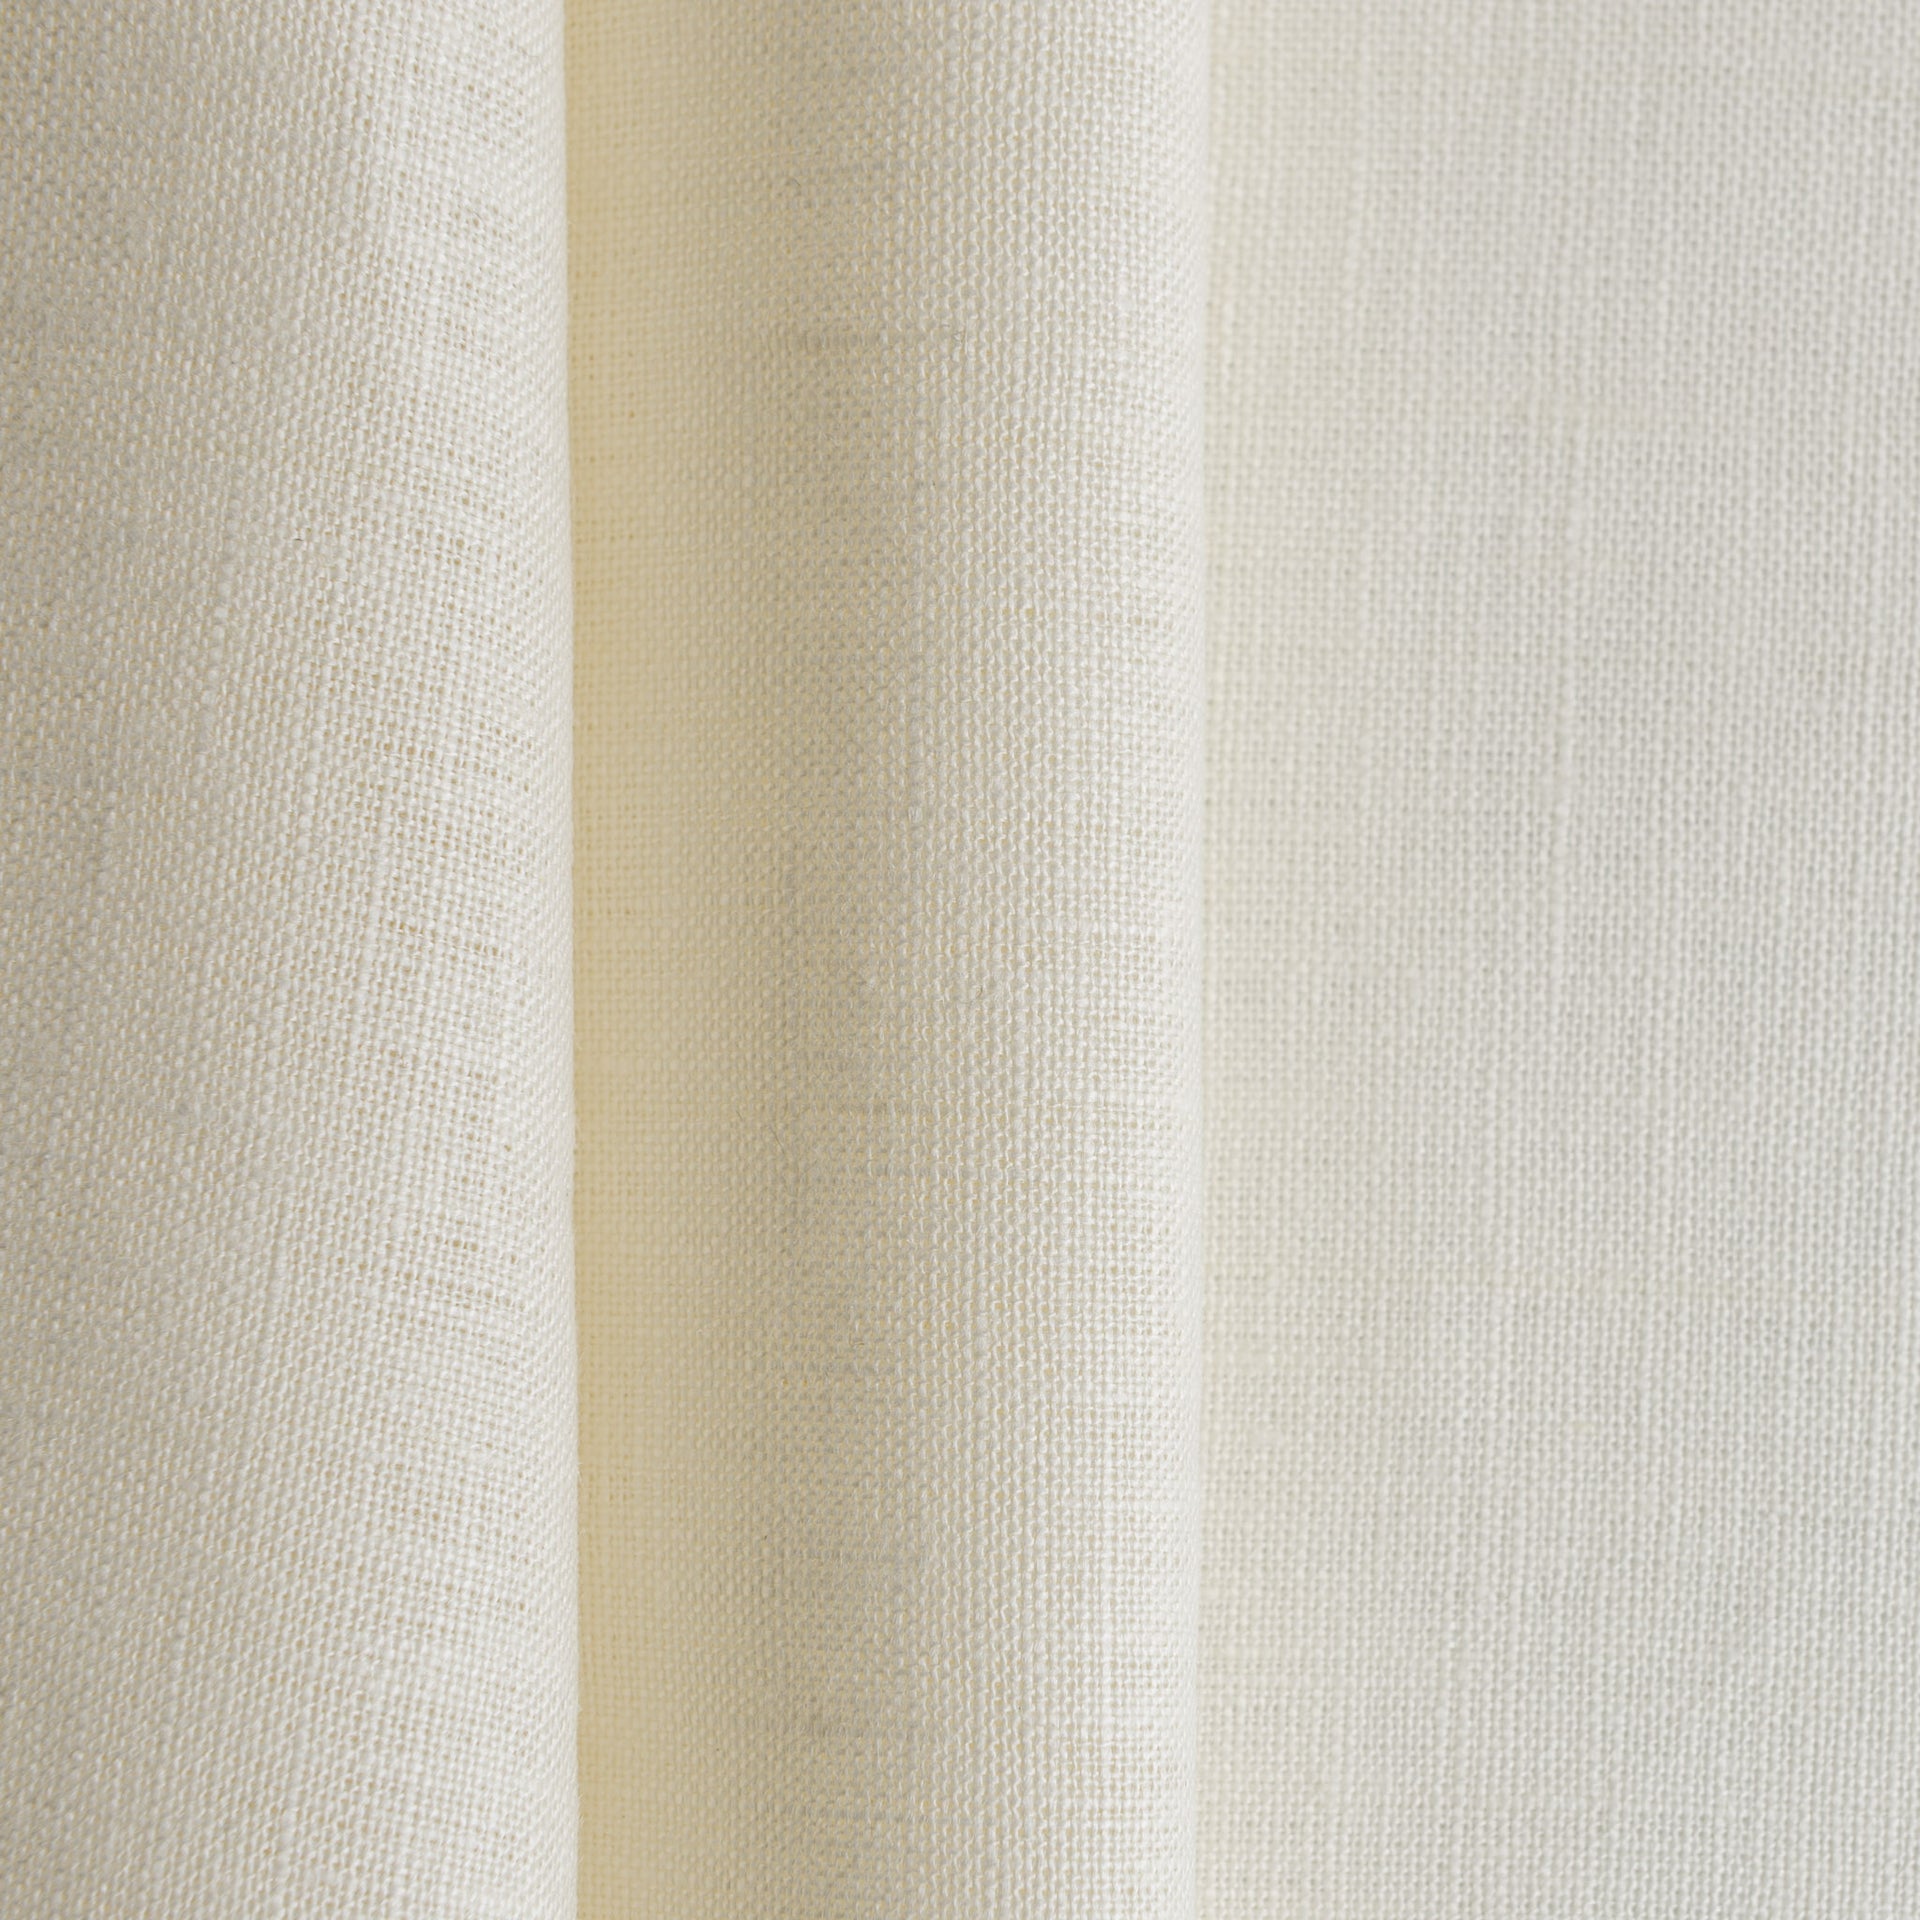 Cream Linen Back Tab Curtain Panel with Cotton Lining - Custom Width, Custom Length, Color: Cream